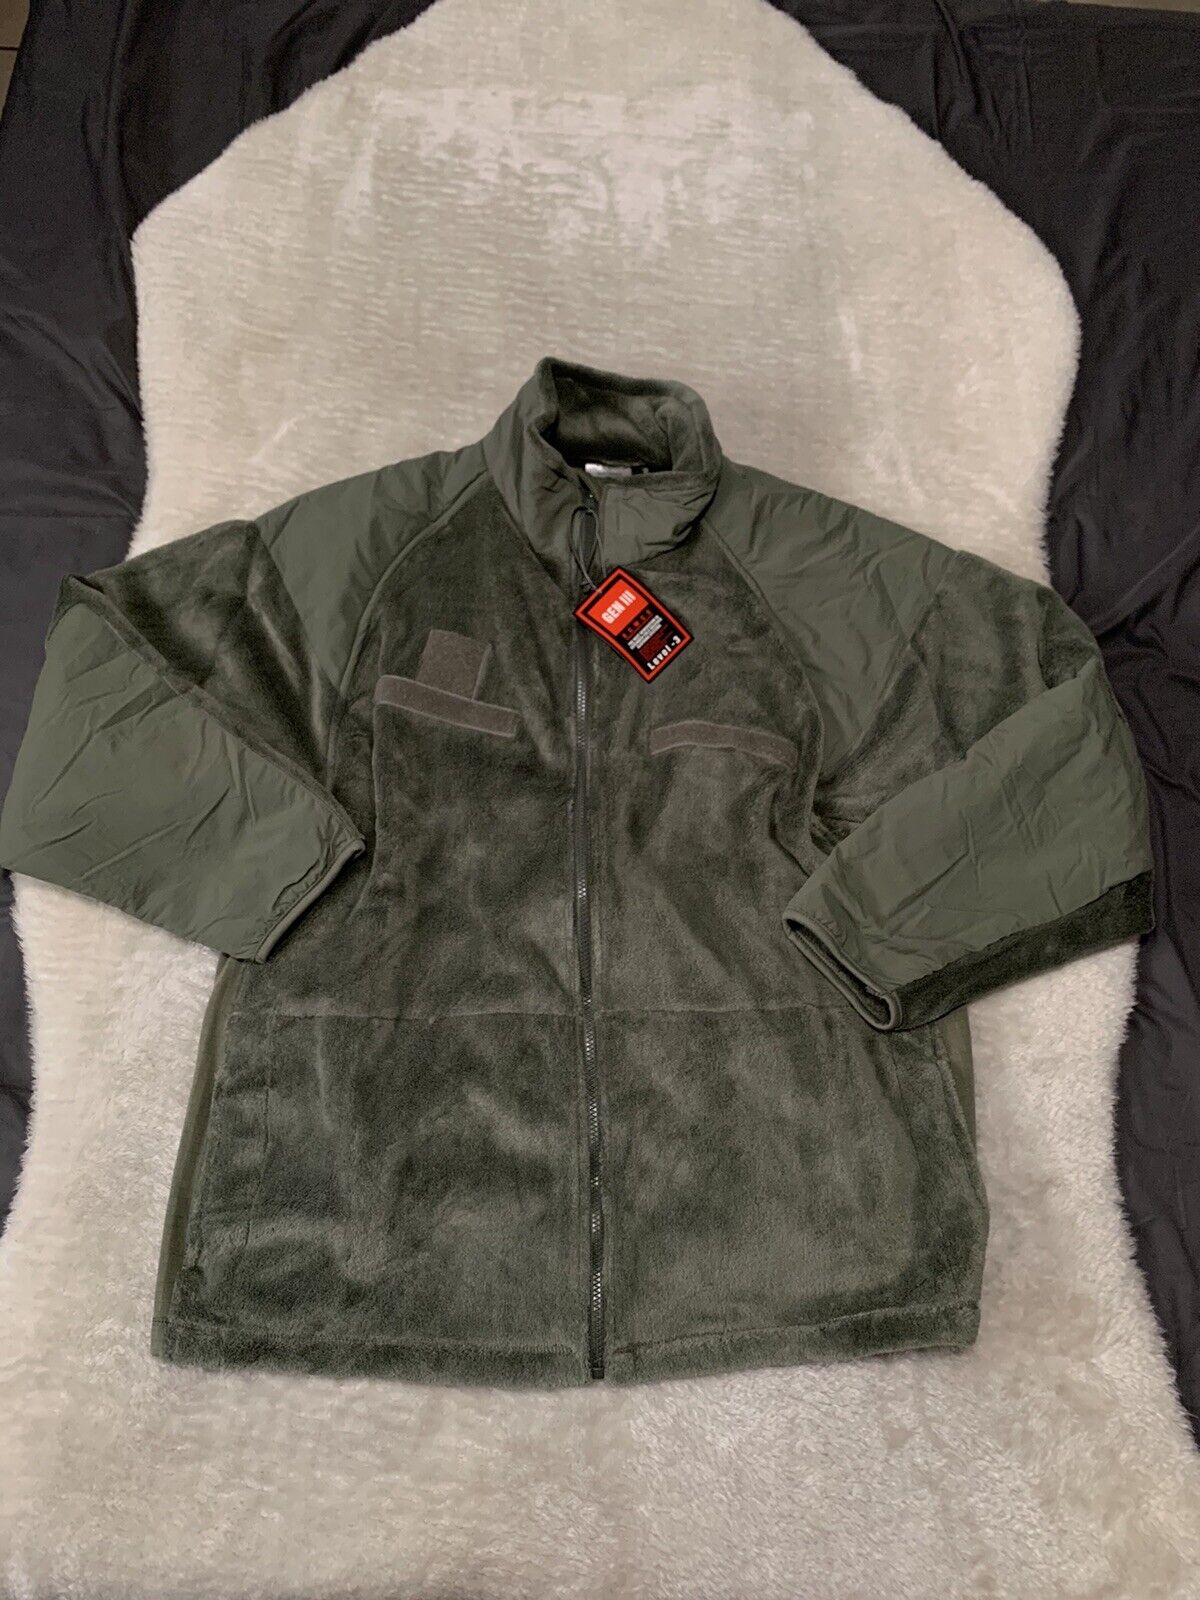 New Generation III / Level 3 ECWCS Military Green Large Fleece Jacket Sweater